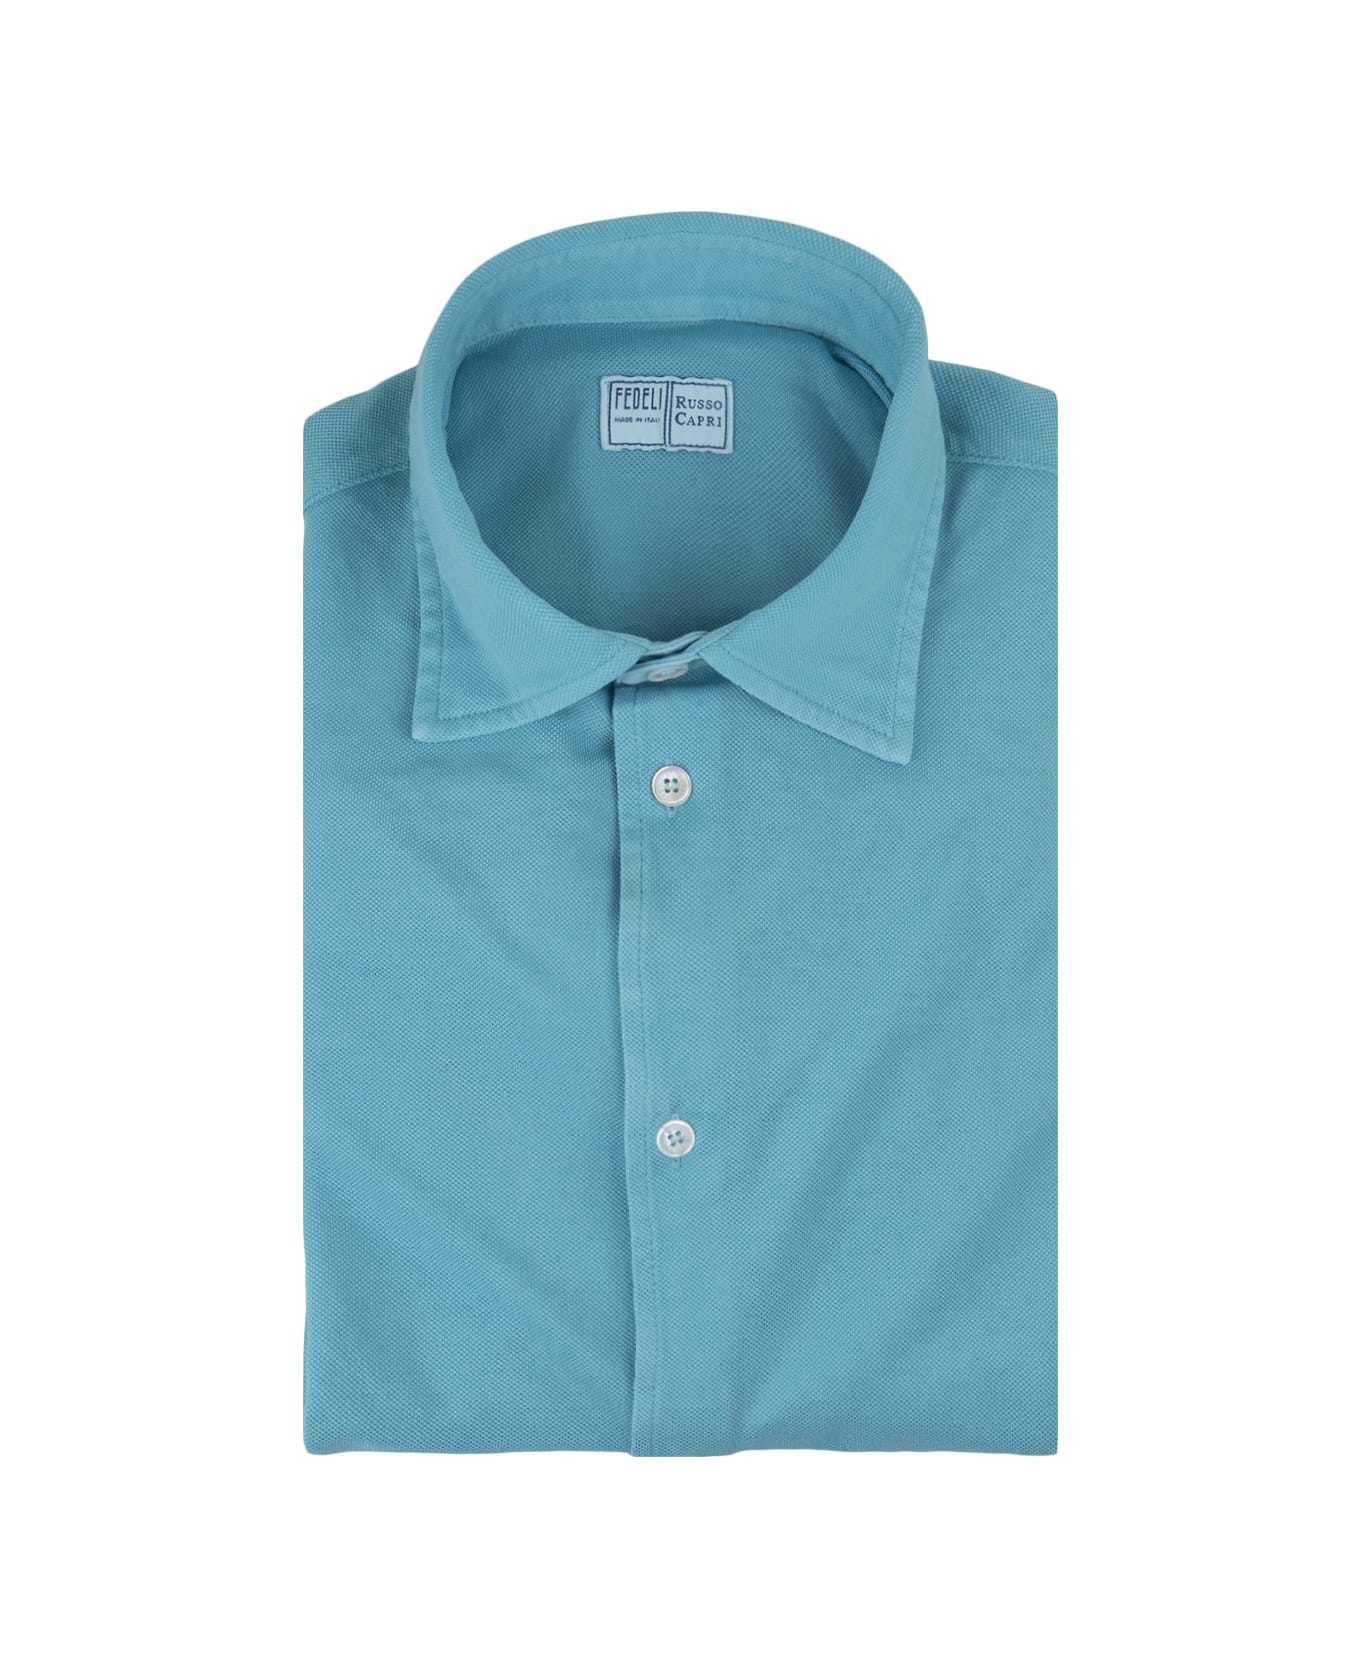 Fedeli Shirt In Turquoise Cotton Piqué - Blue